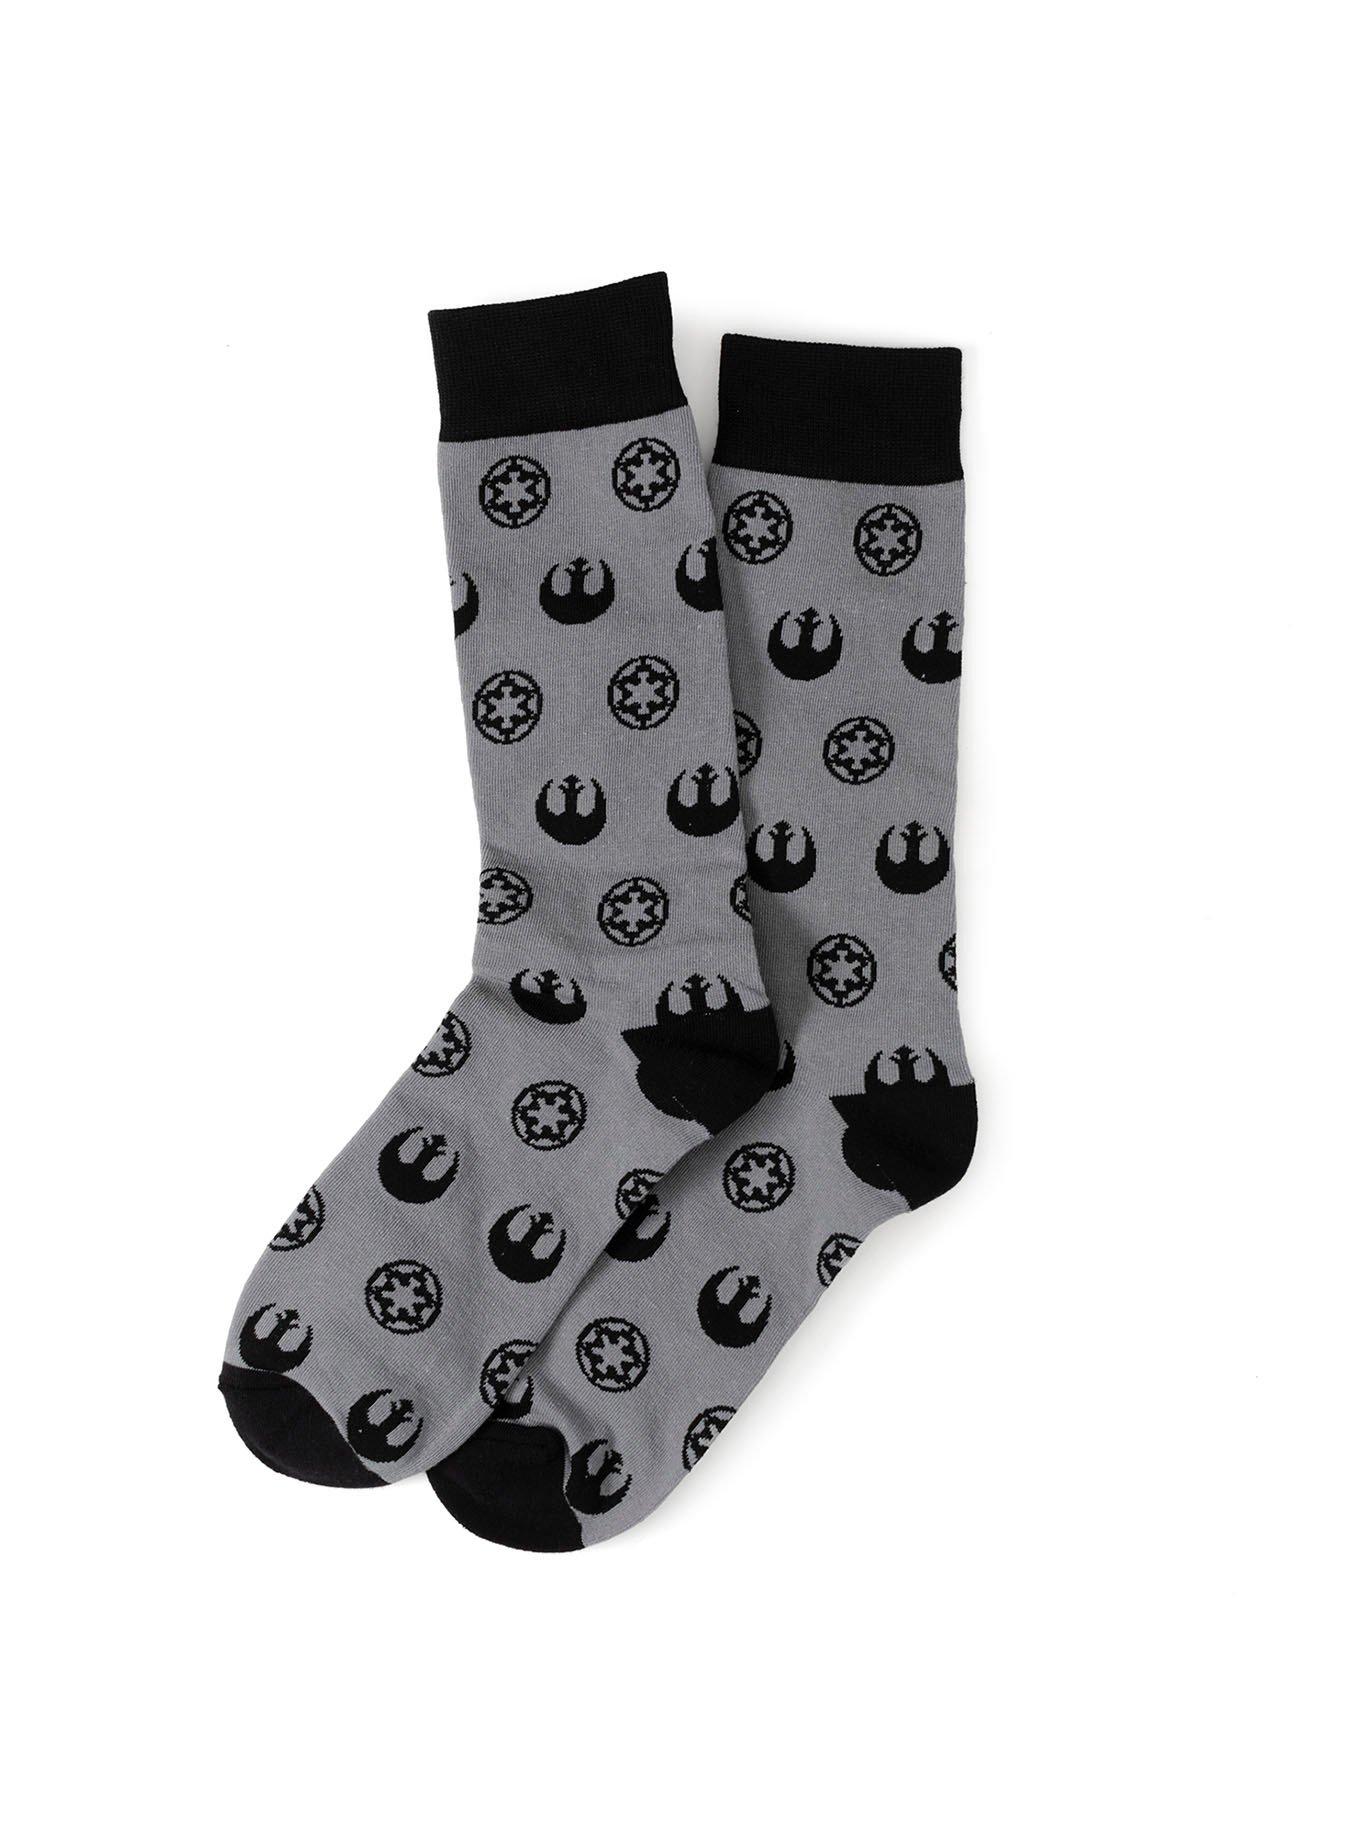 Star Wars Rebel Imperial Grey Men's Sock